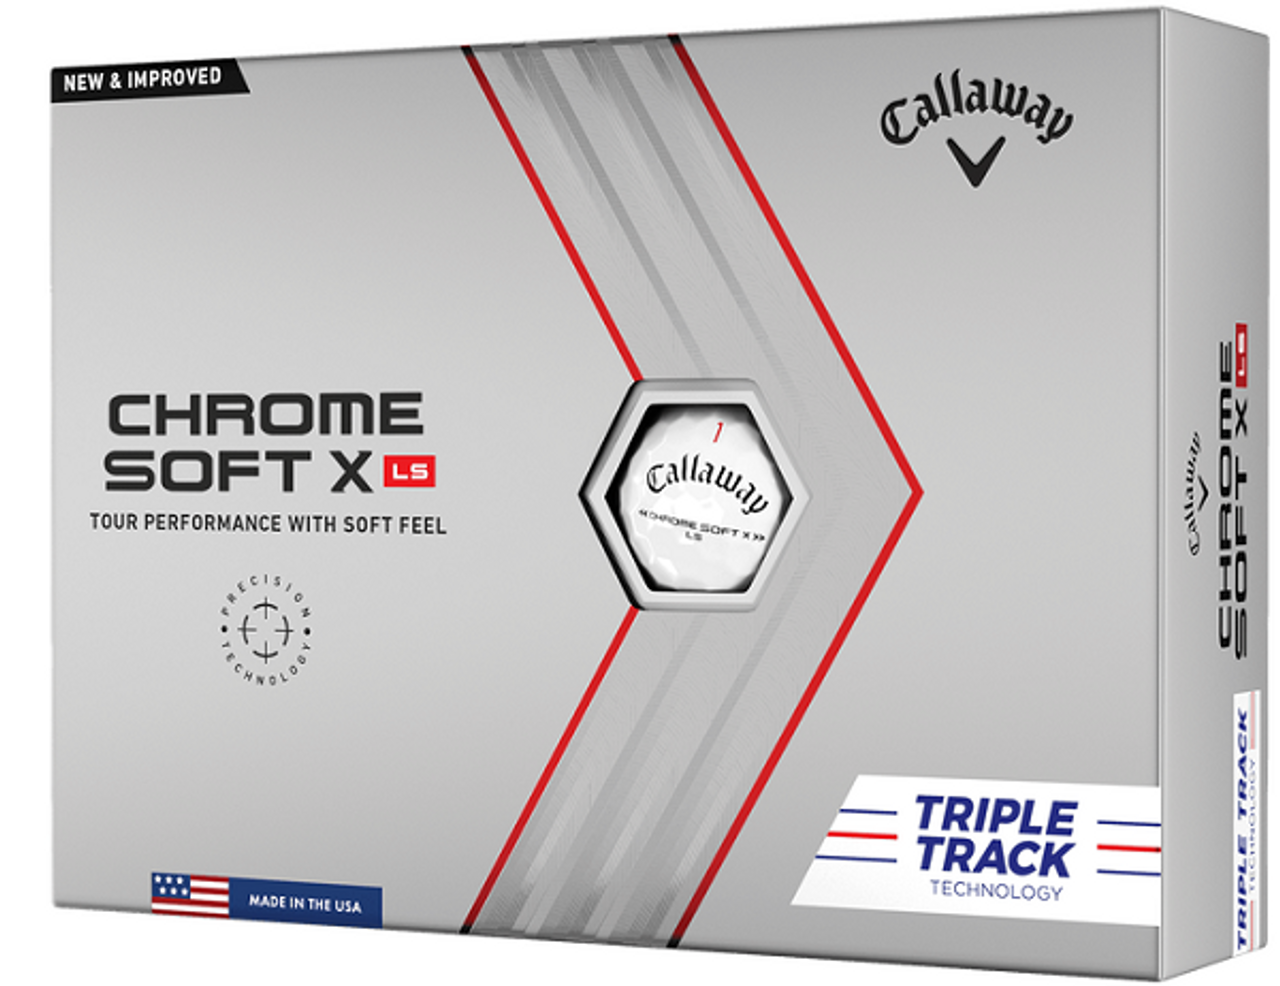 Callaway Chrome Soft X LS Triple Track Golf Balls | RockBottomGolf.com